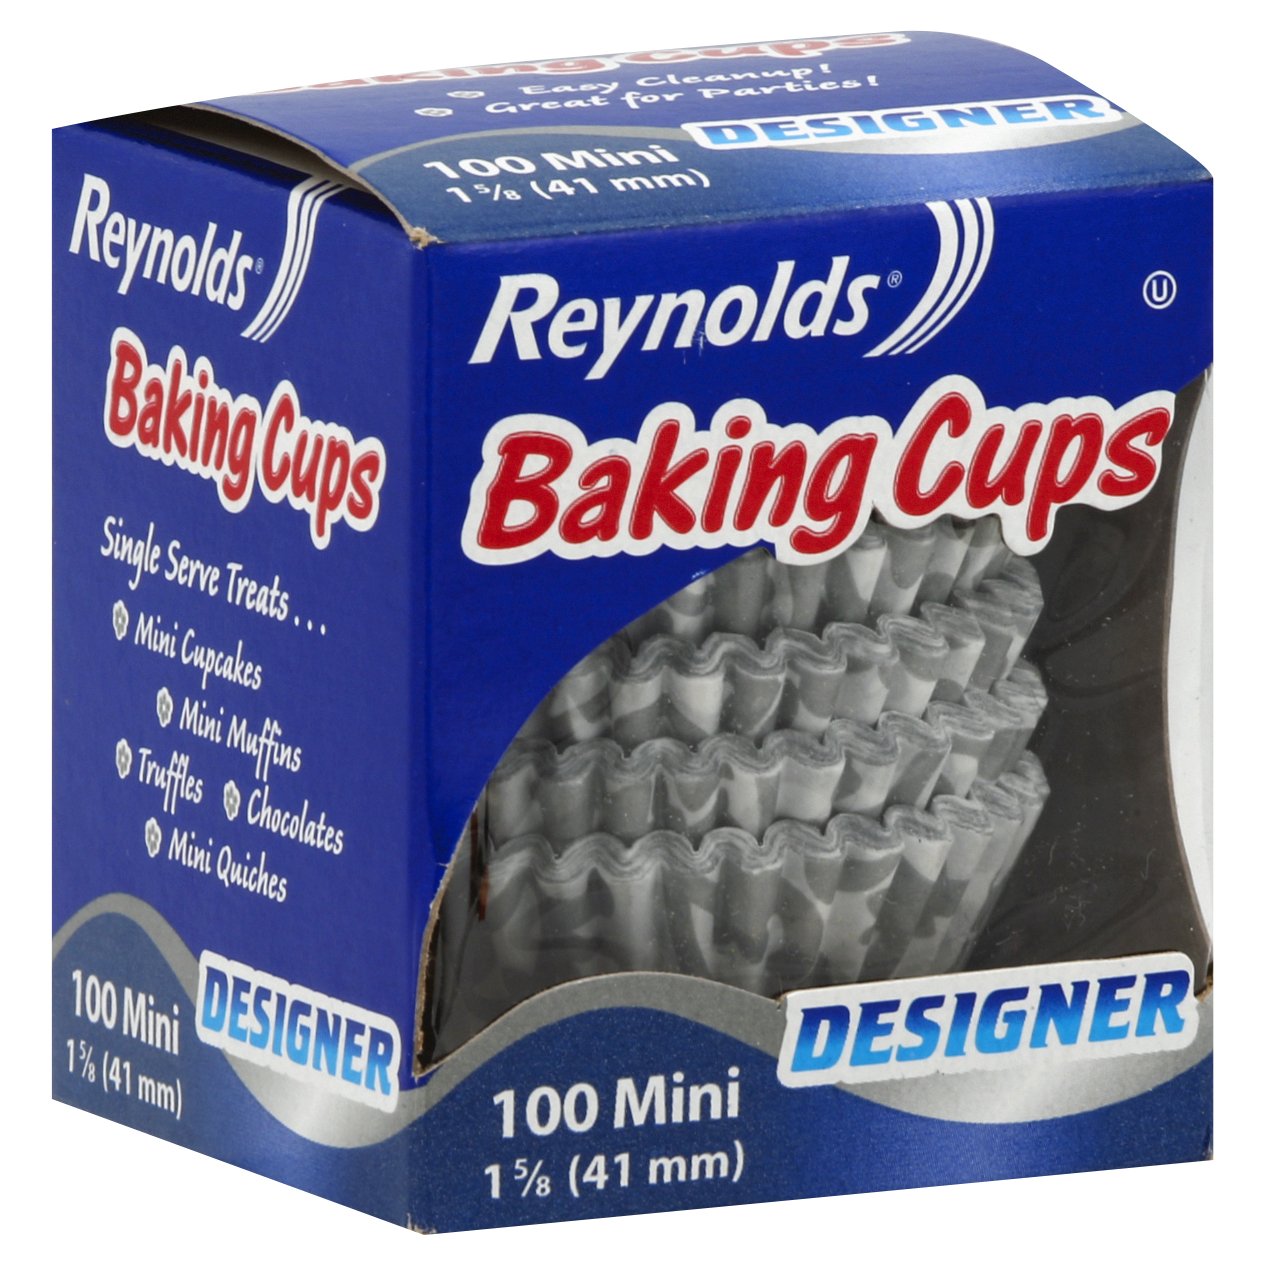 Reynolds Designer Mini Baking Cups